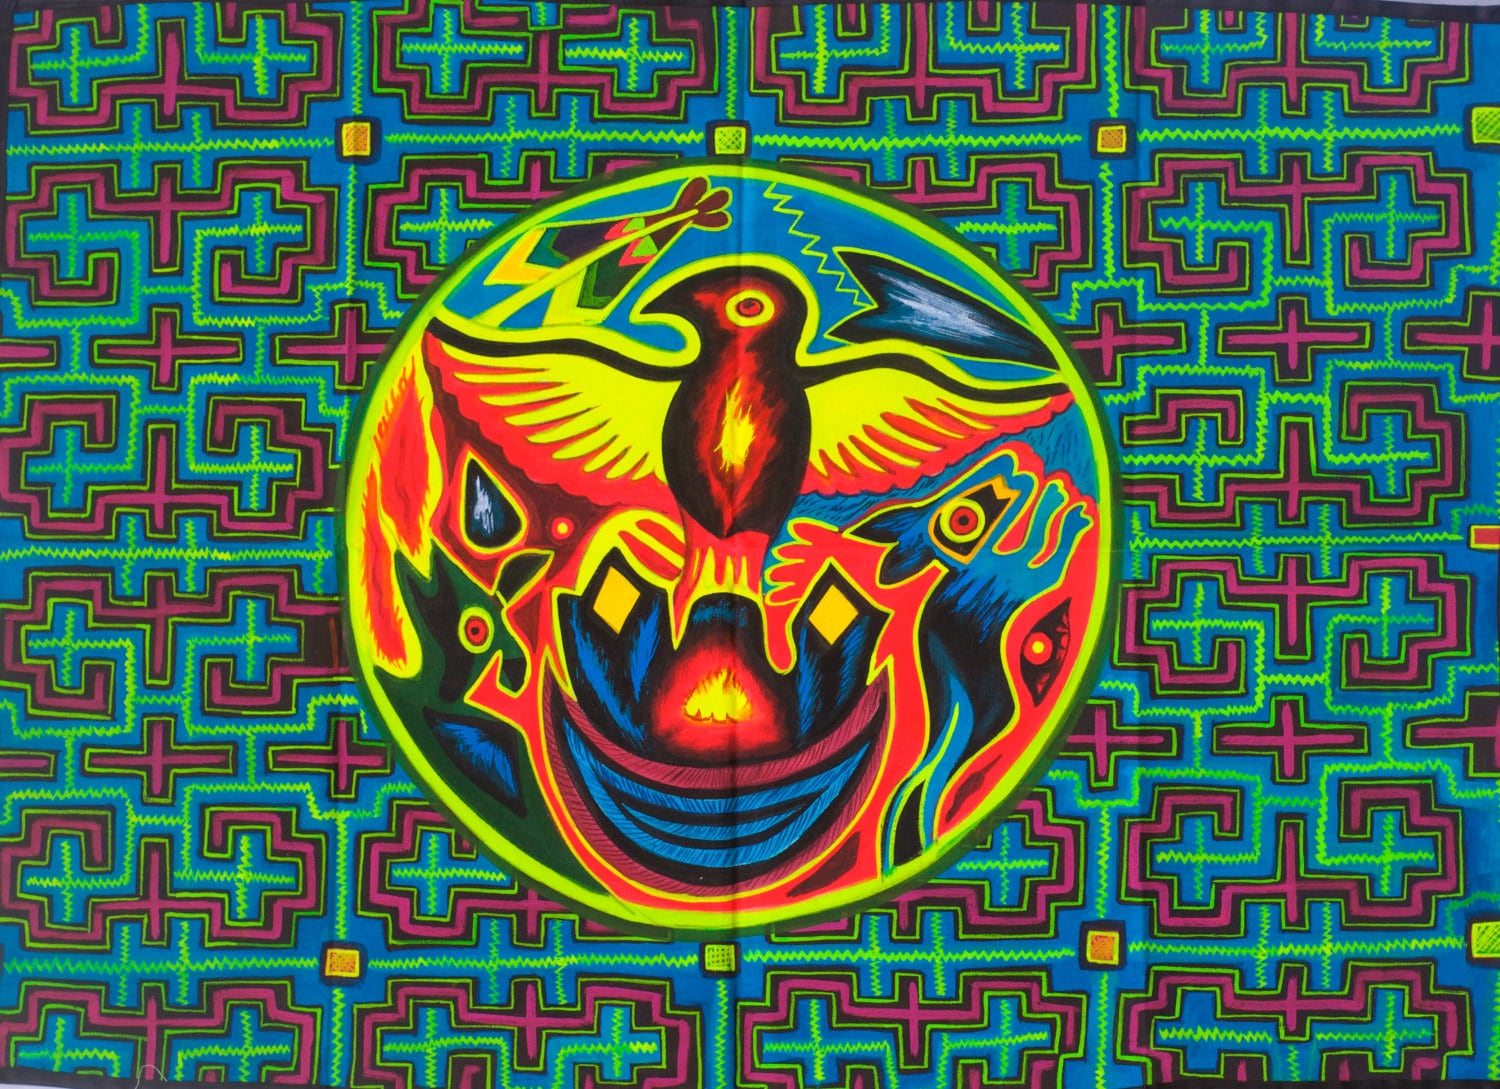 Huichol Eagle UV Painting - 90x60cm - handmade on order - fully blacklight glowing colors - peyote shaman visionary artwork